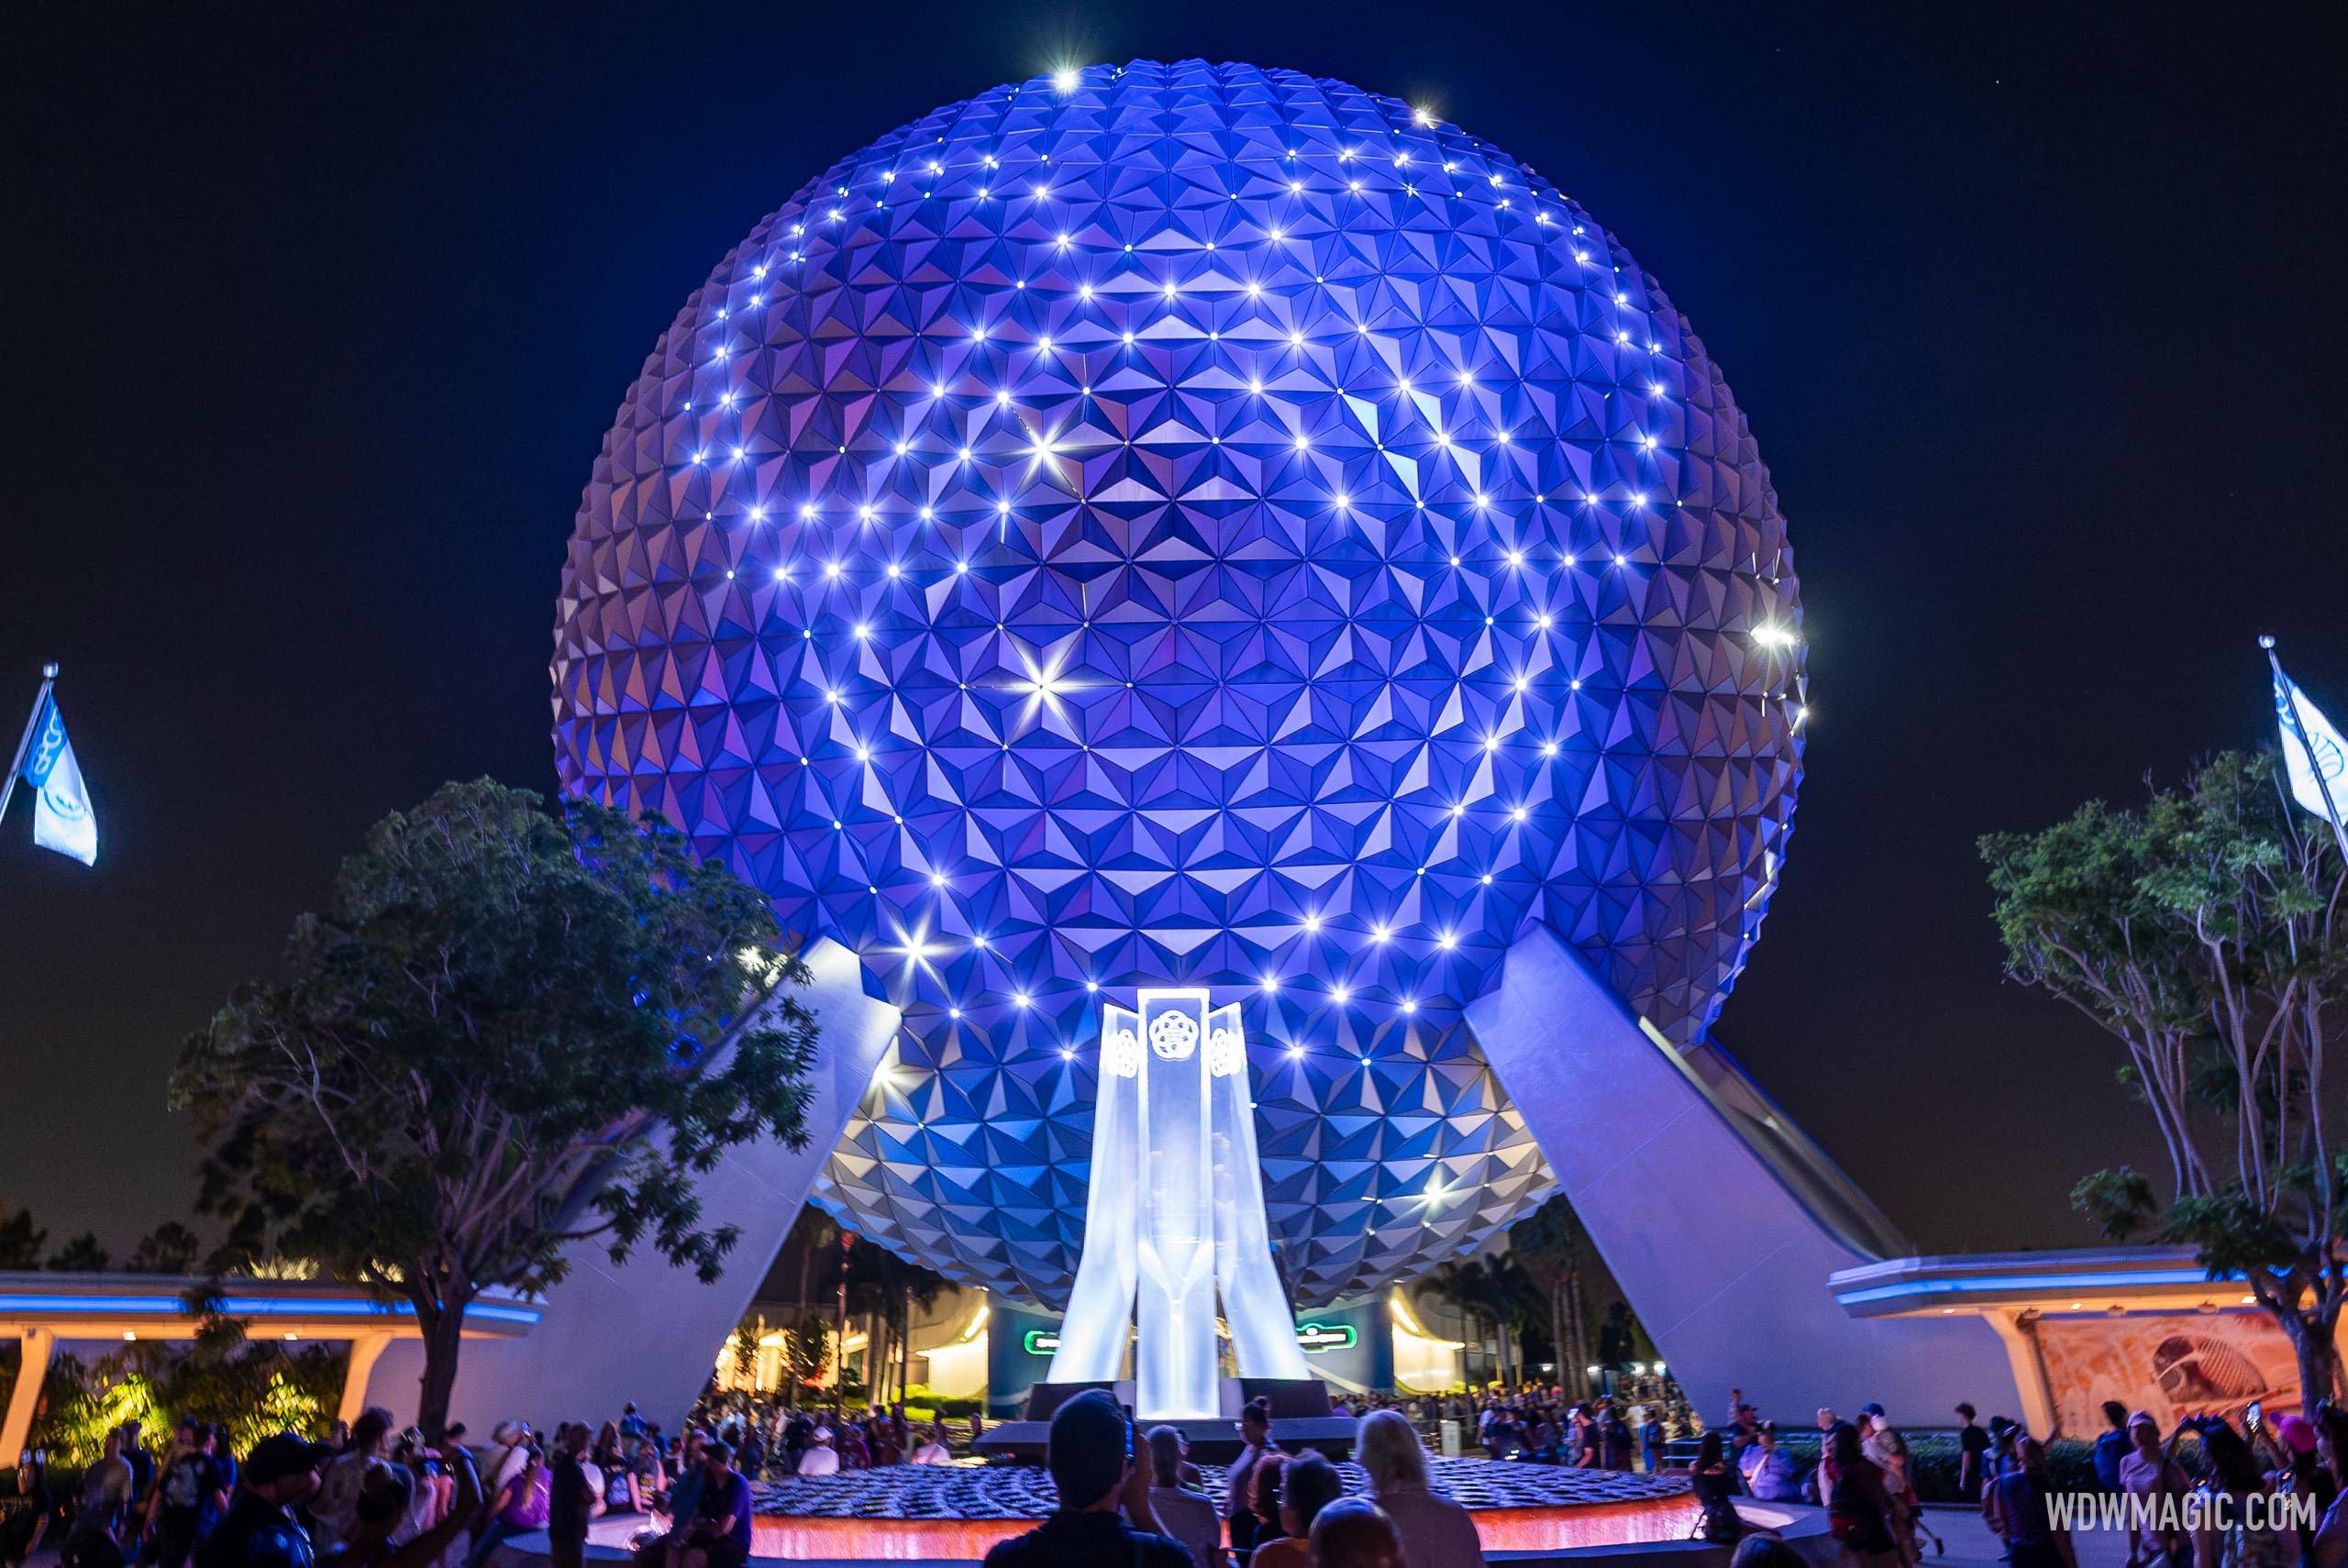 Disney100 Light Show at Spaceship Earth